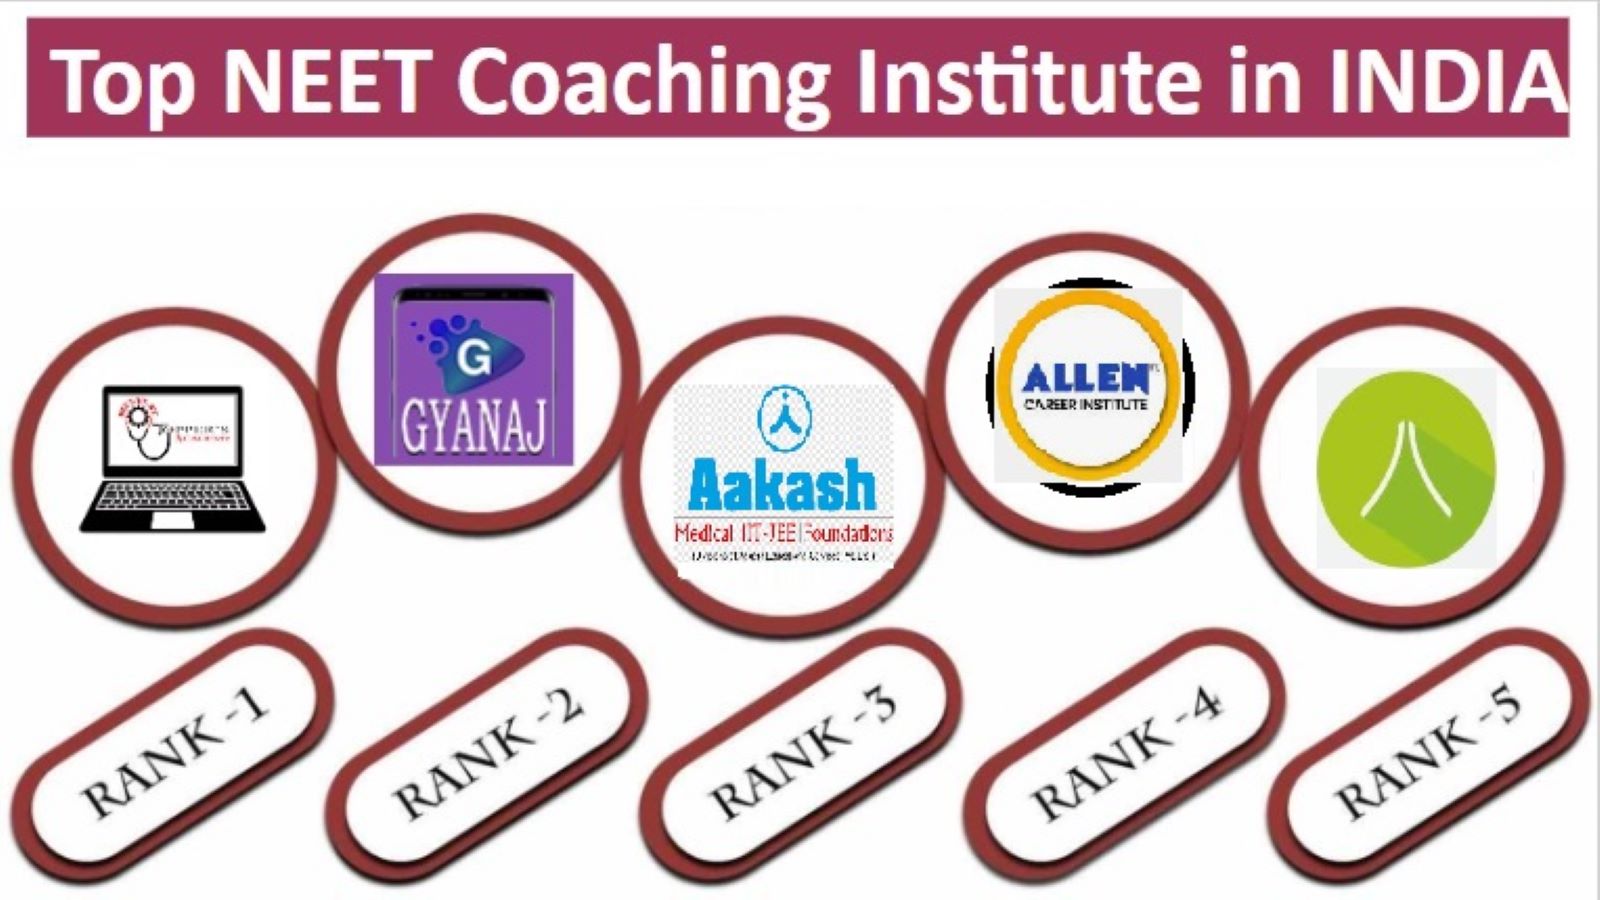 Top 10 NEET Coaching Centers In India